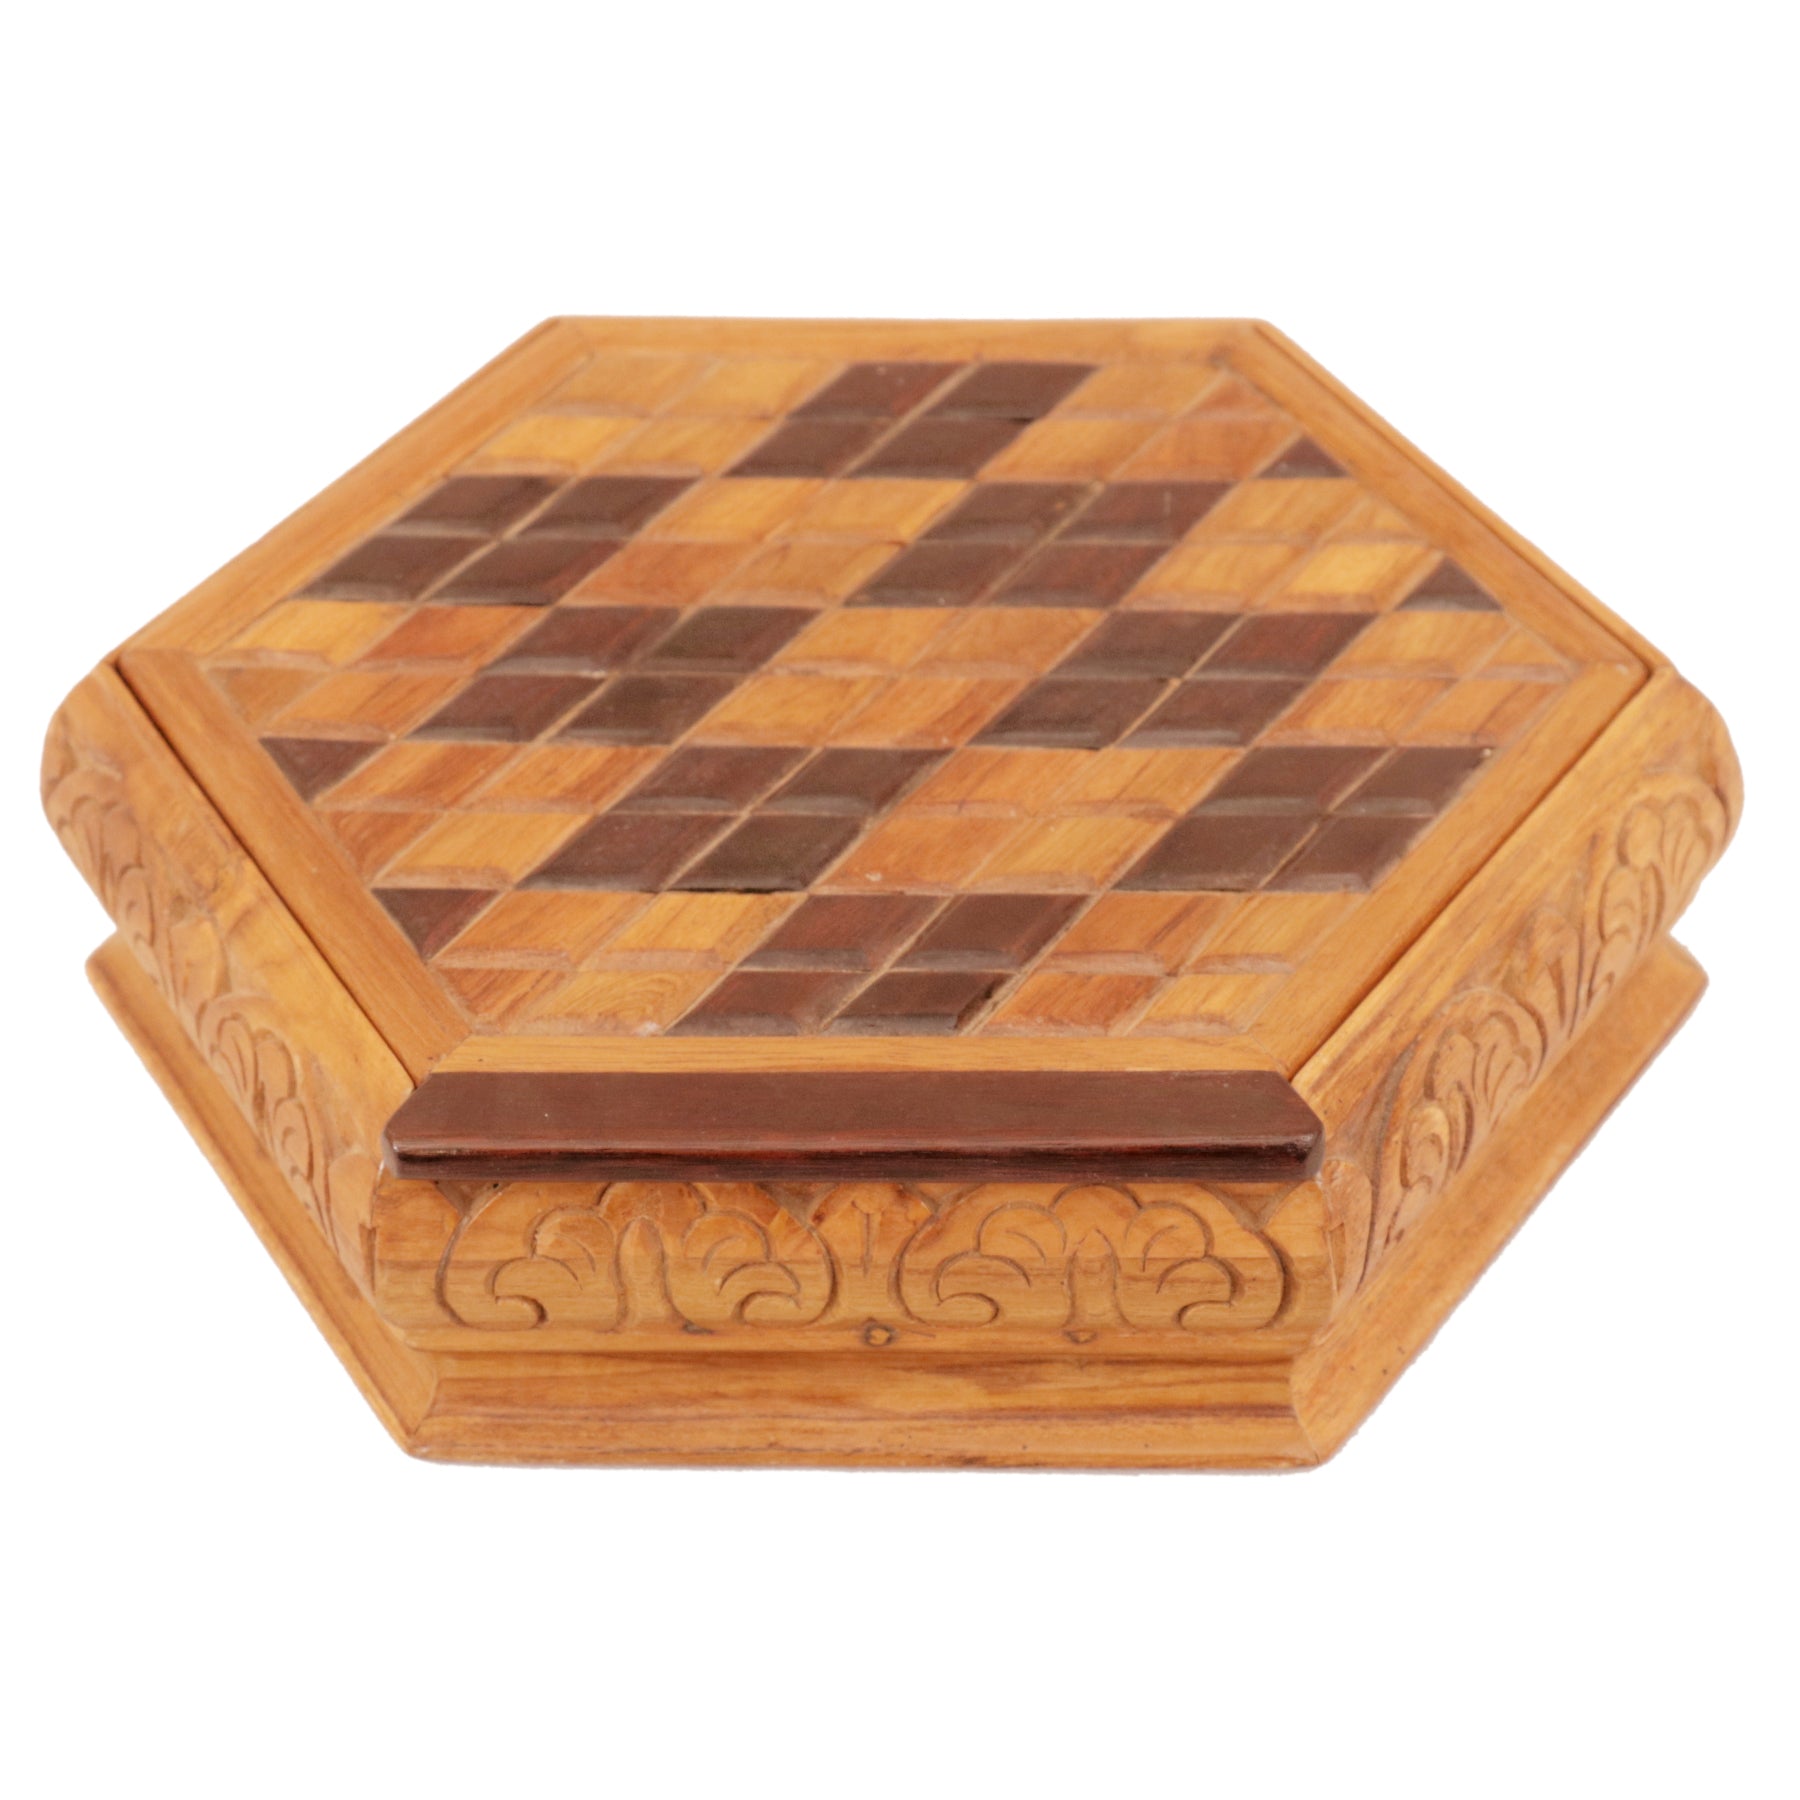 Checkered Diamond Box Wooden Box